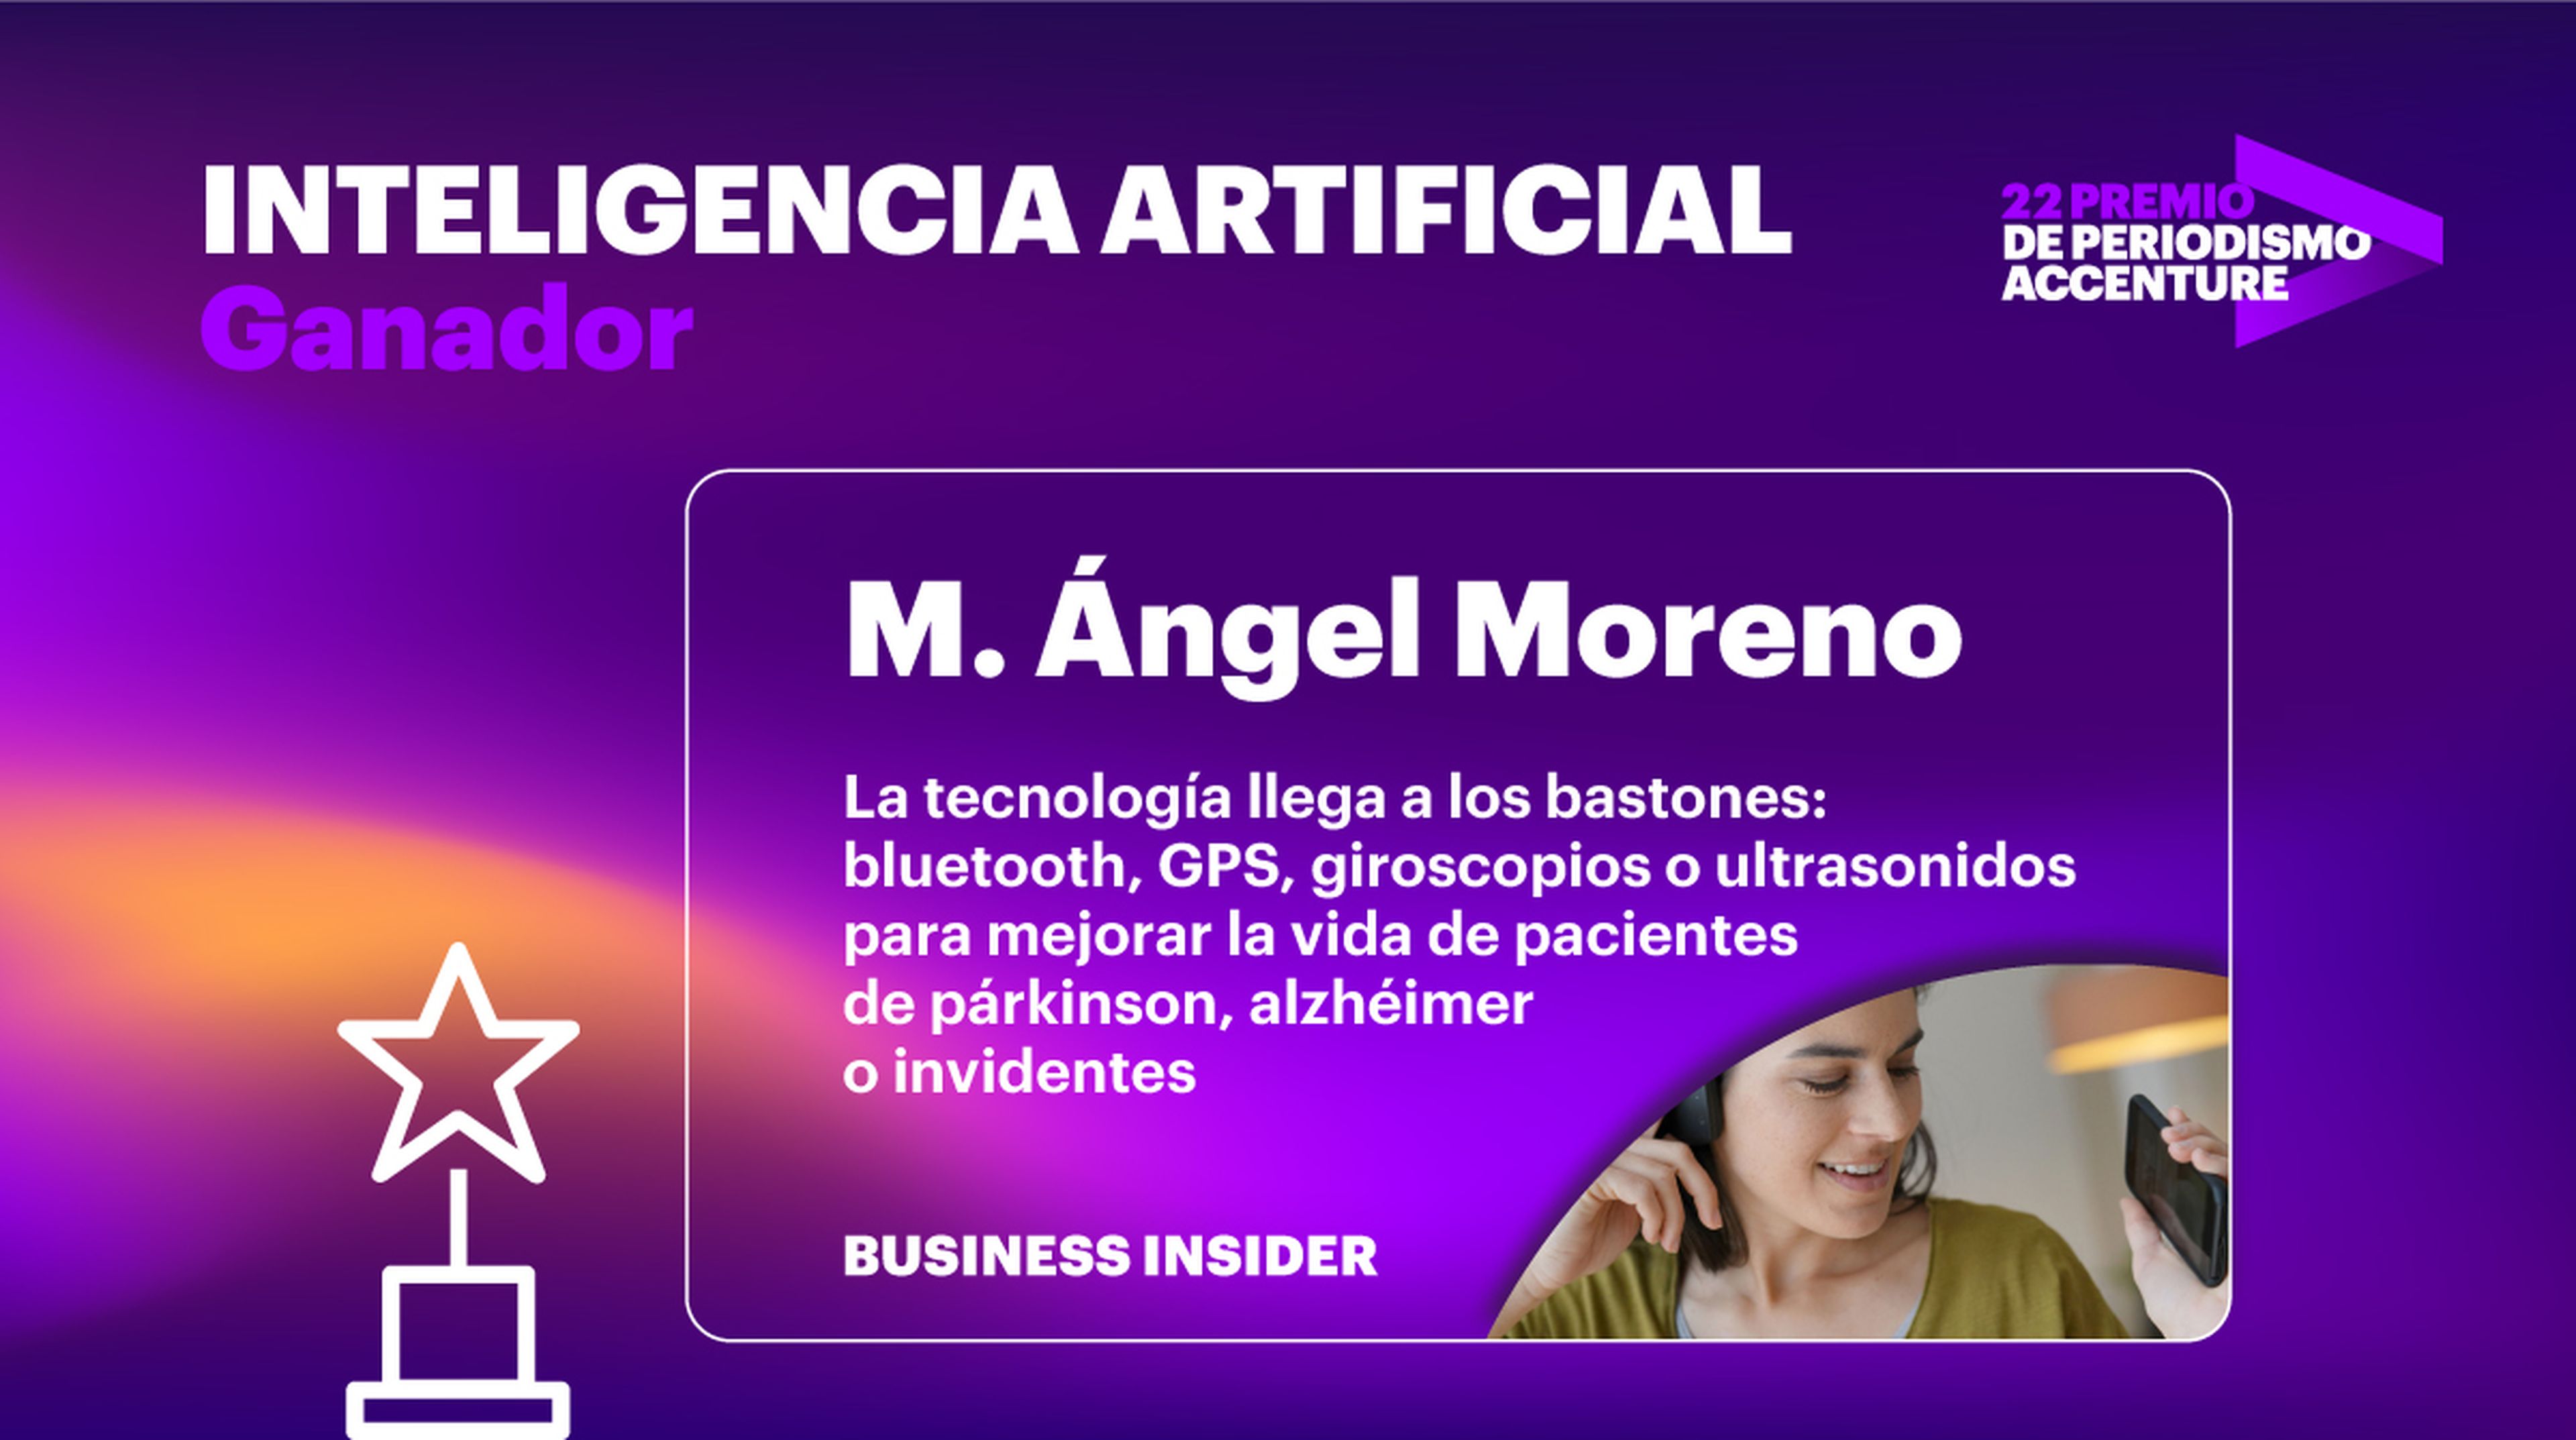 Premio Accenture Periodismo Miguel Ángel Moreno